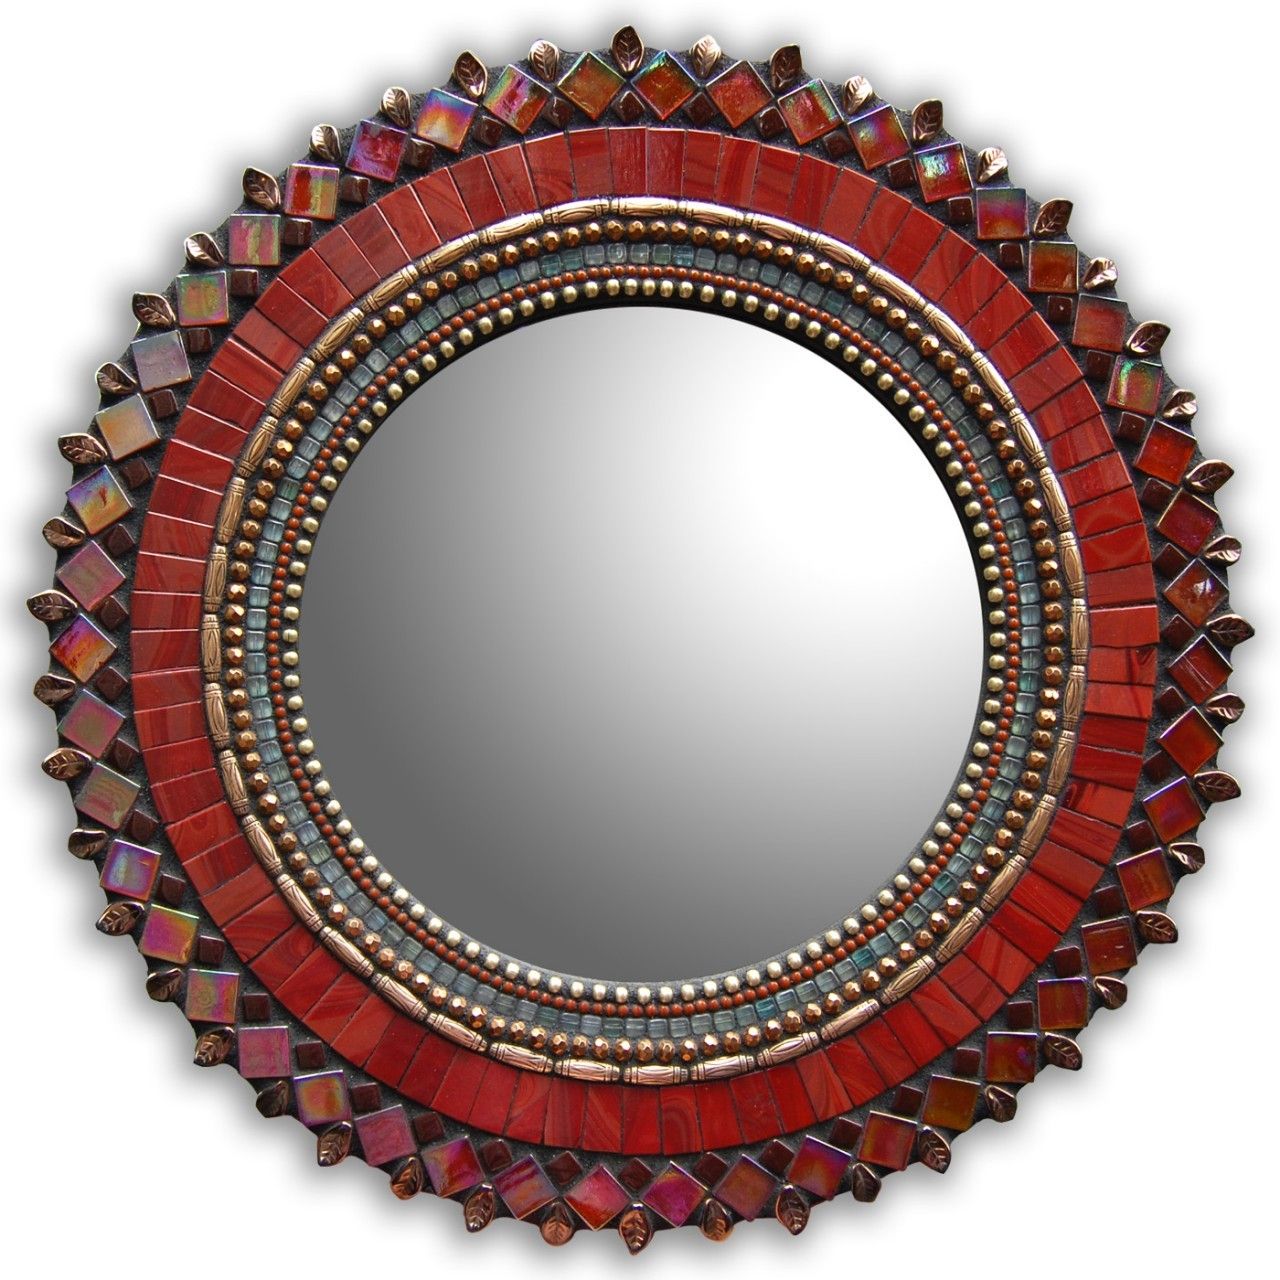 Zetamari Mosaic Artworks - 7" Round Mirror (Brick Red Sun)